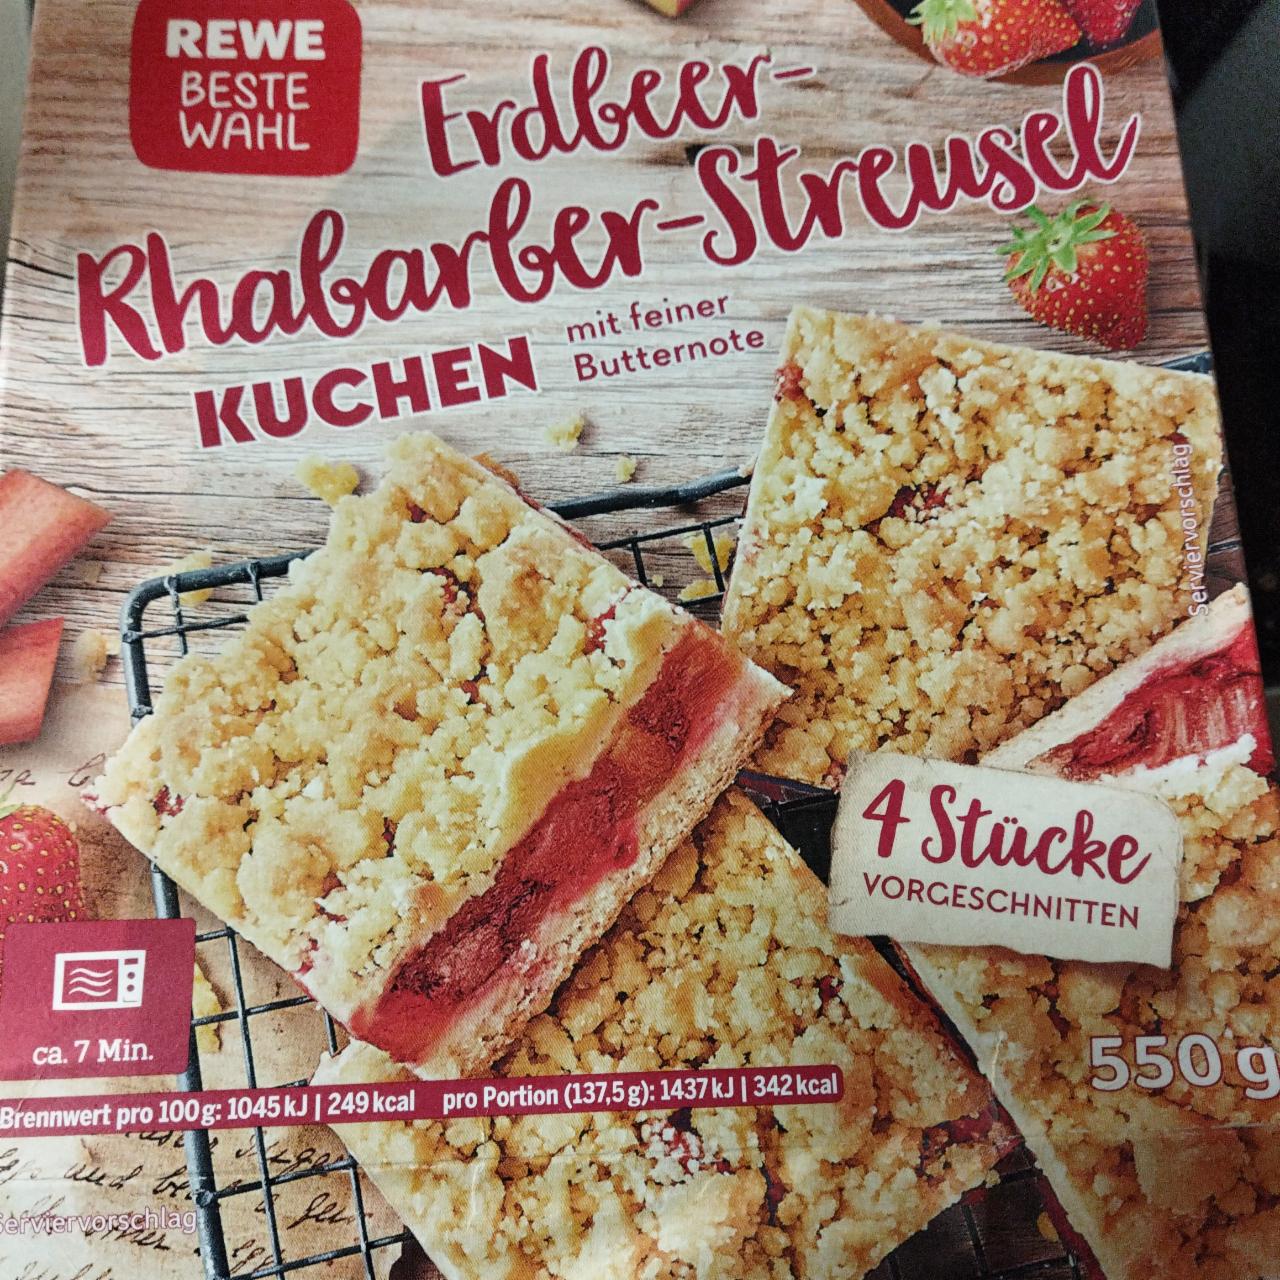 Fotografie - Erdbeer-Rhabarber-Streusel Kuchen Rewe Beste Wahl